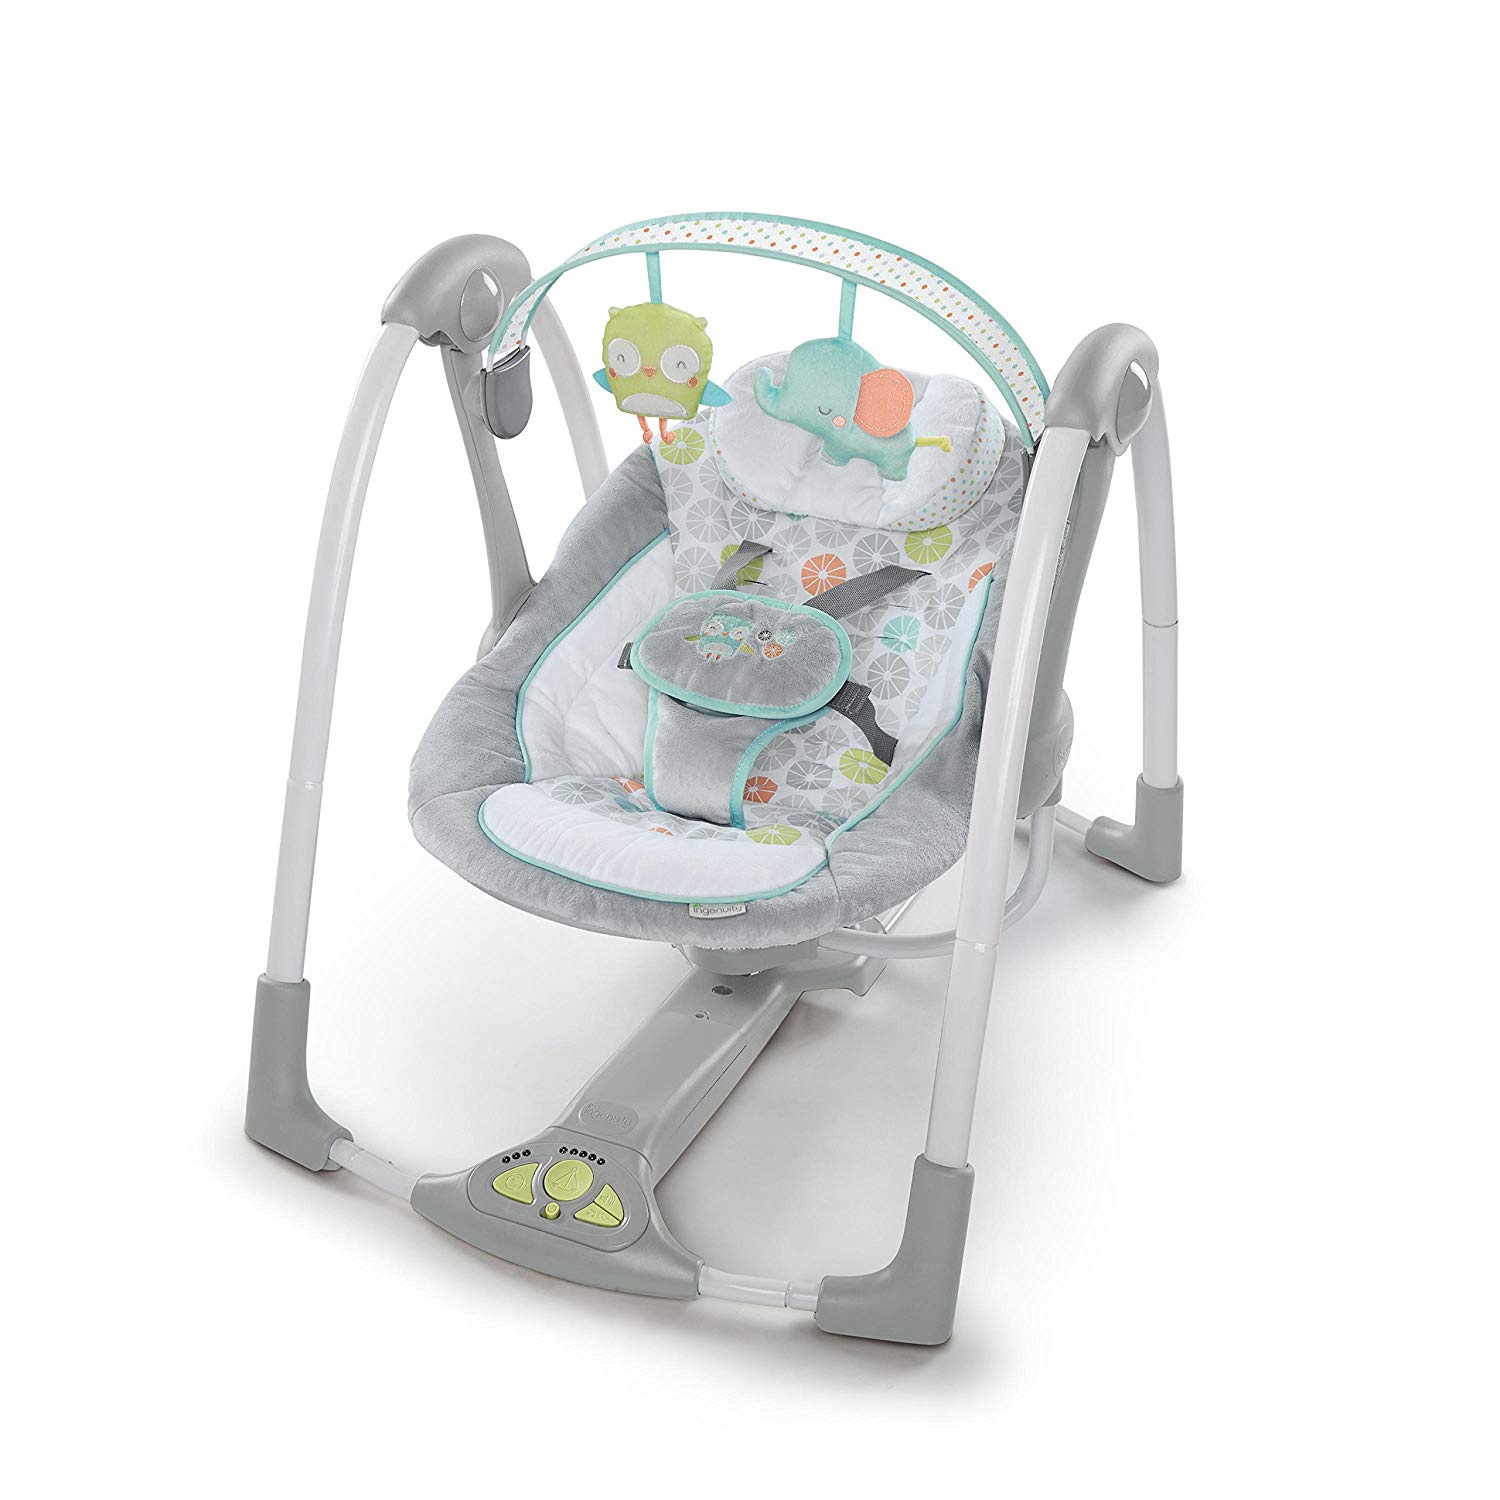 Ingenuity Portable Baby Swing multi-coloured